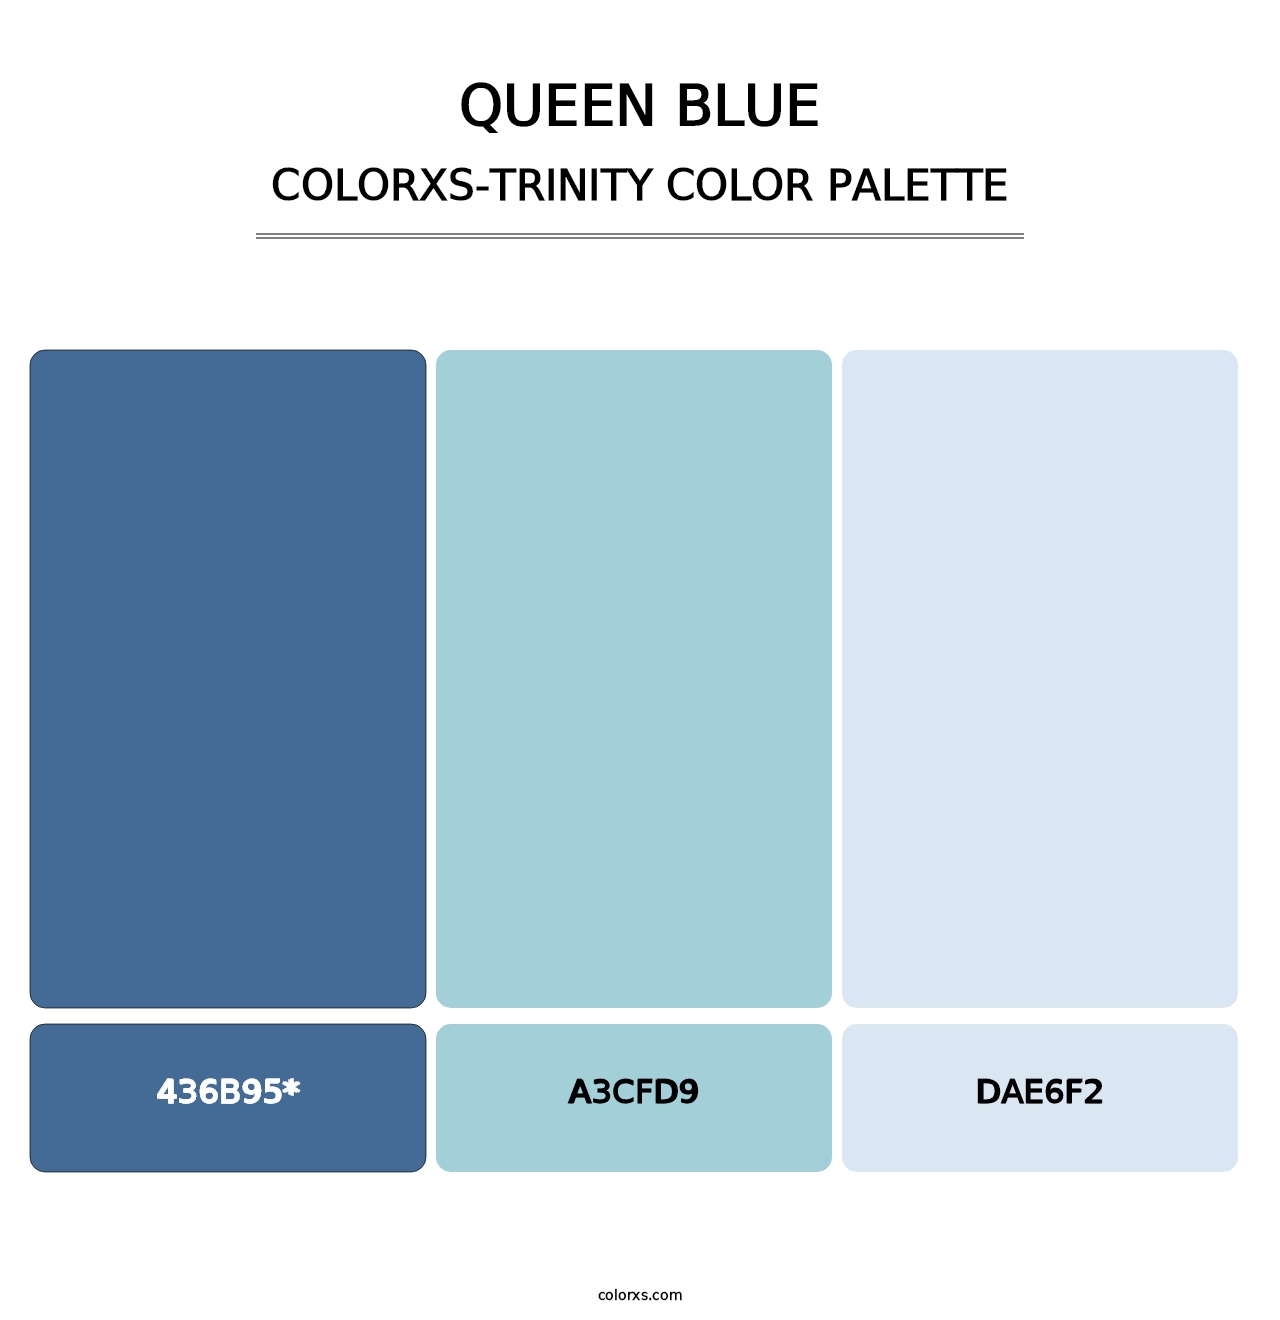 Queen Blue - Colorxs Trinity Palette